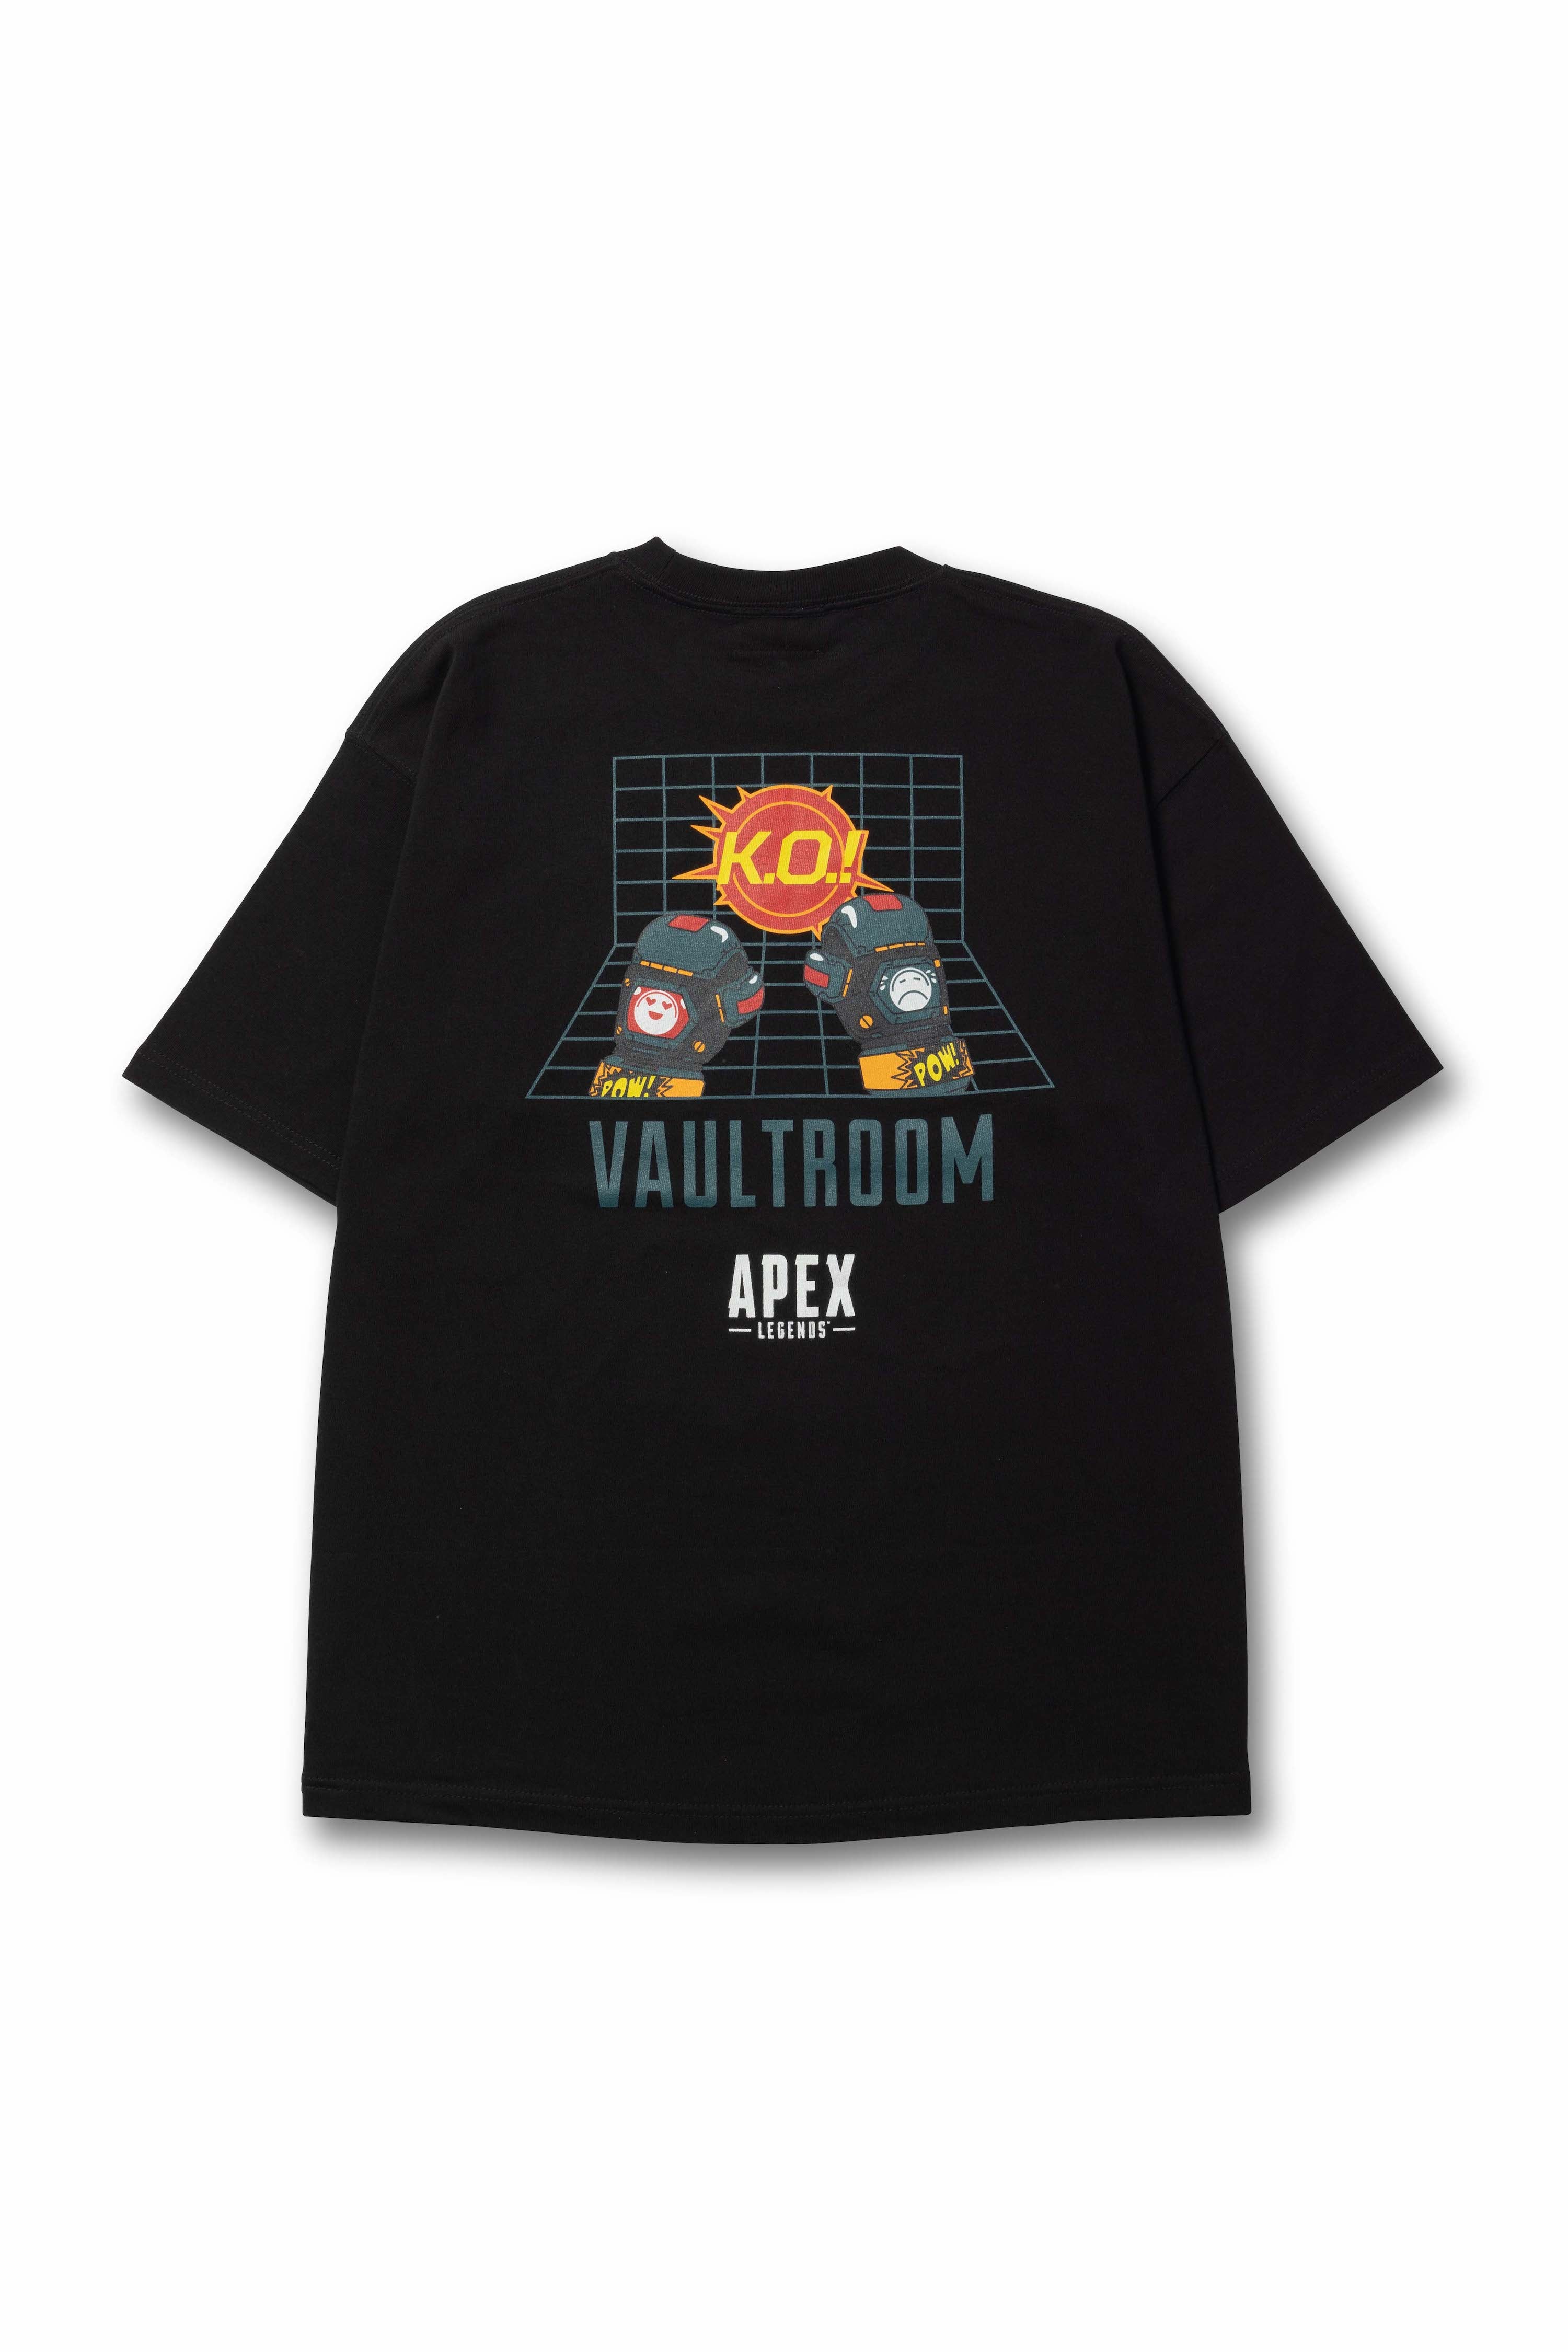 XL vaultroom Apex WRAITH TEE WHITE Tシャツ apex legends - メンズ